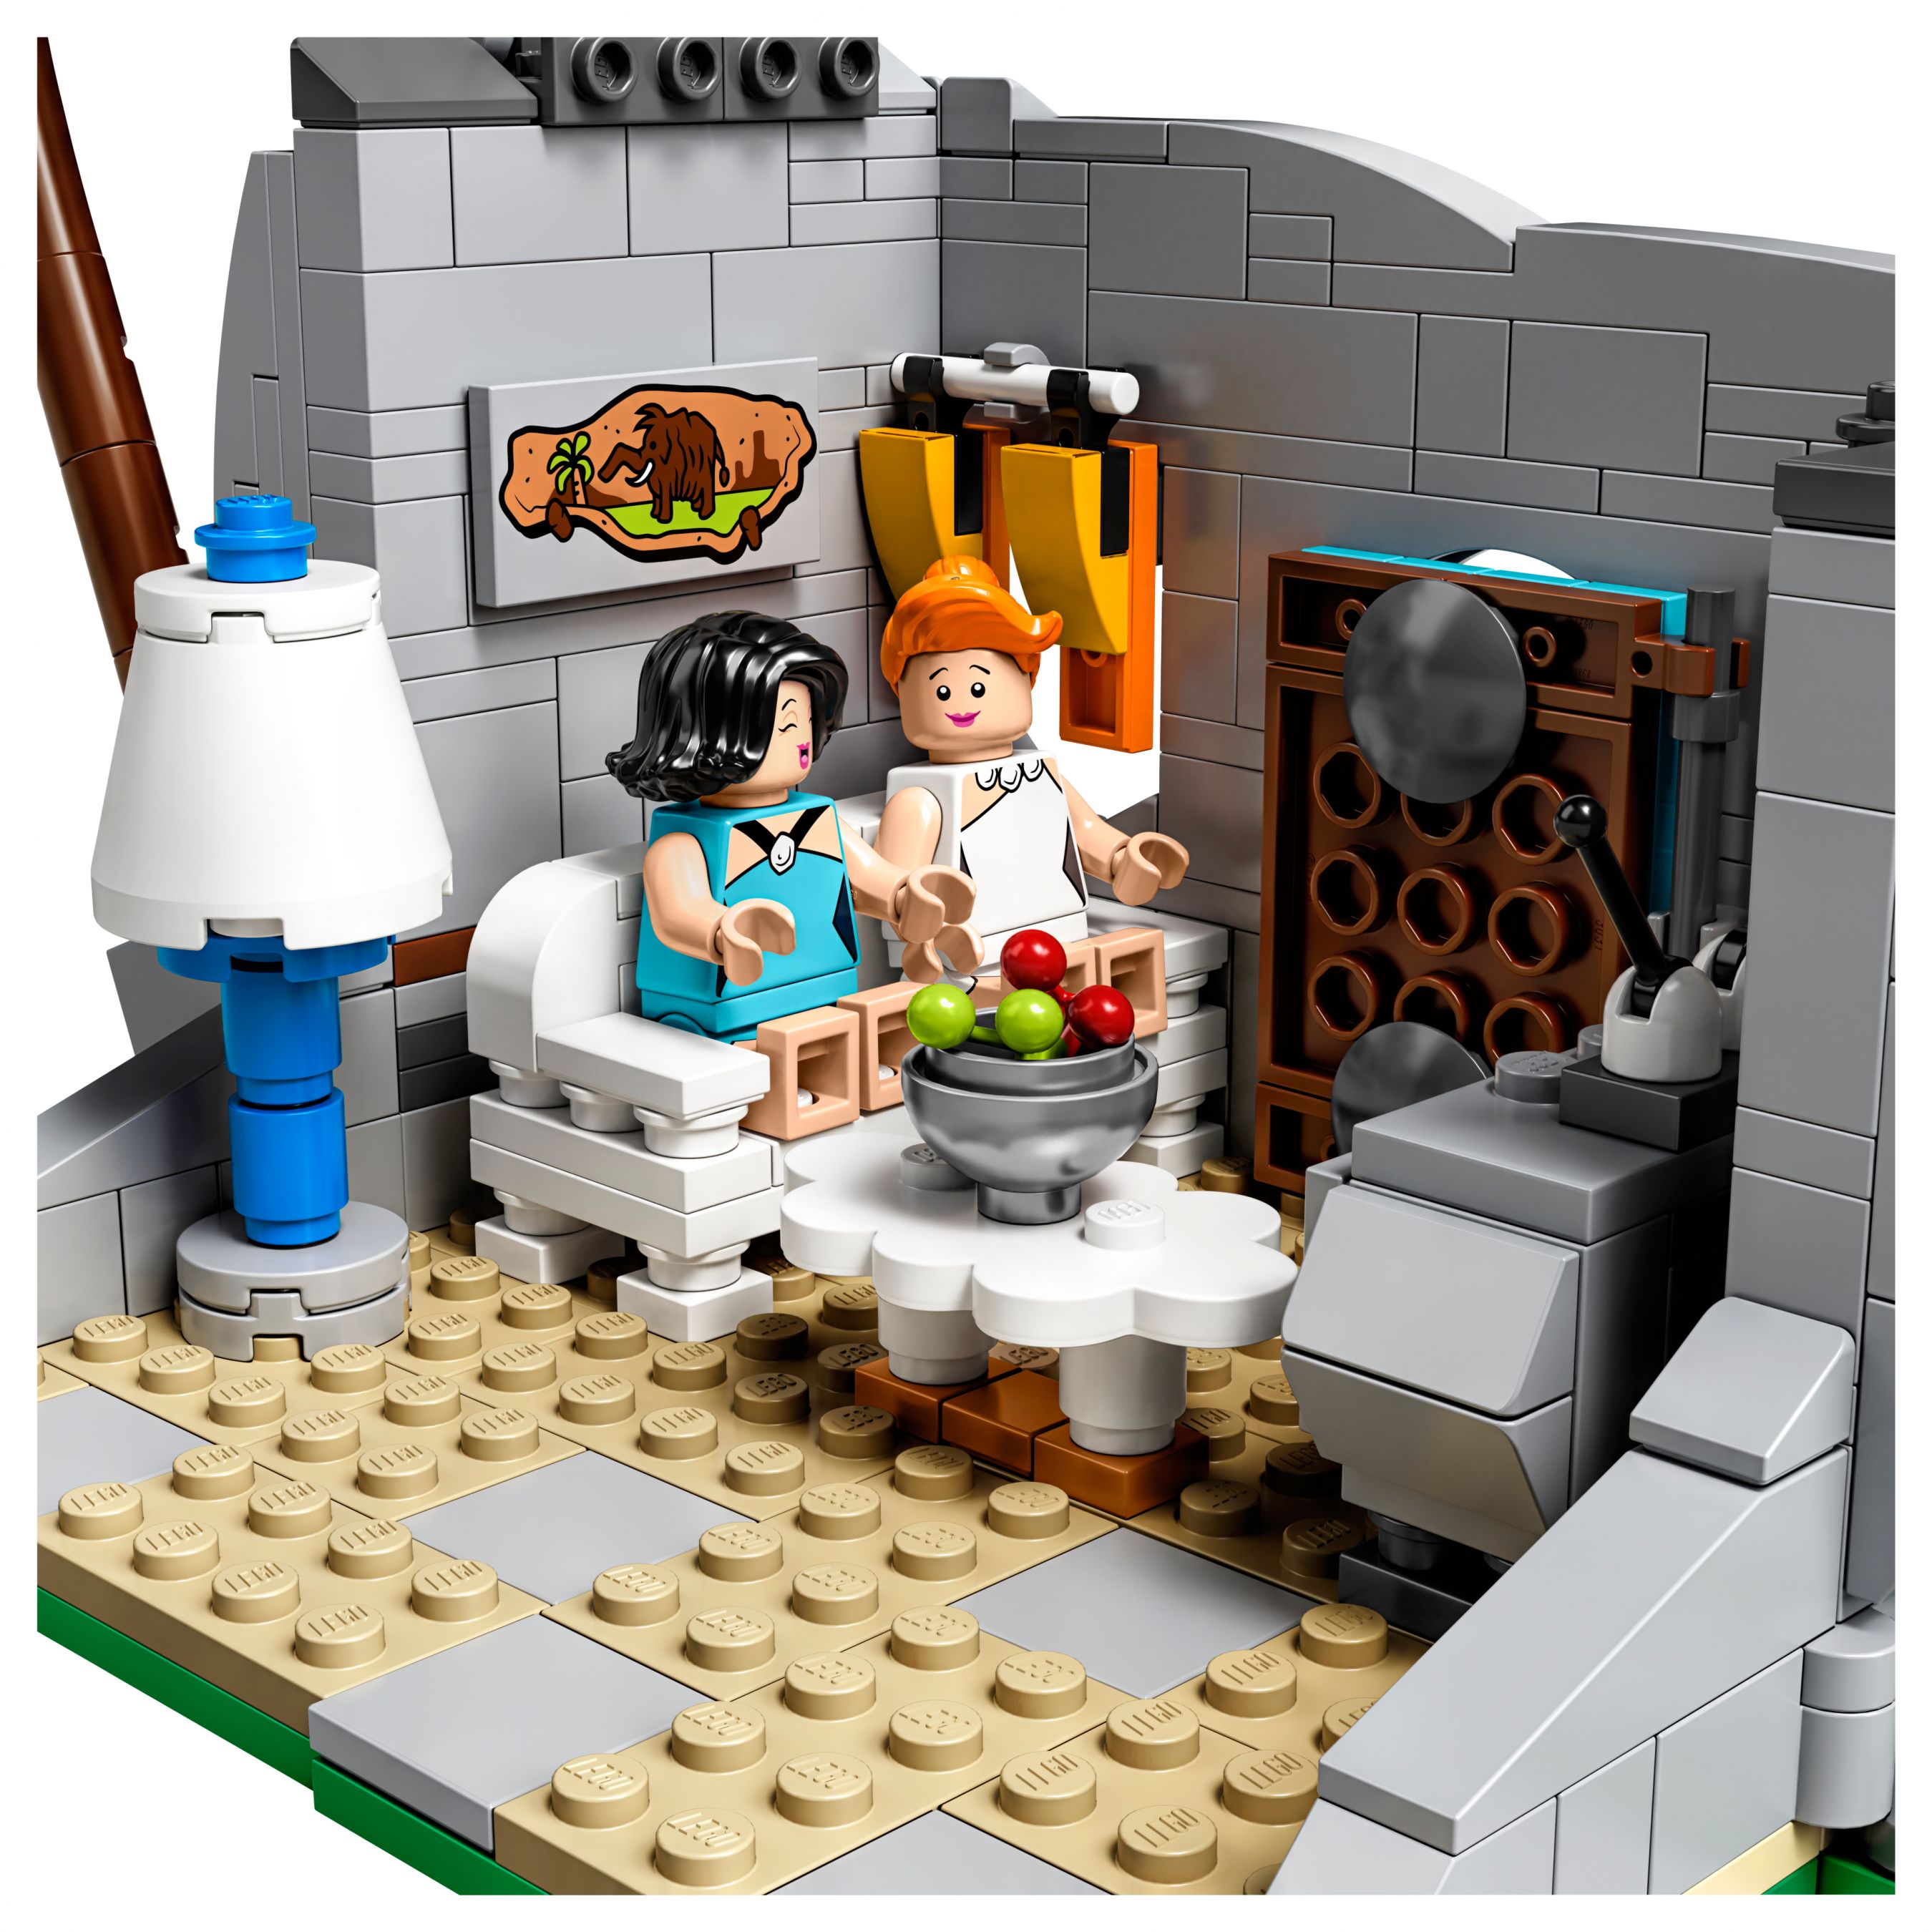 LEGO Ideas 21316 The Flintstones - Familie Feuerstein LEGO_21316_alt7.jpg